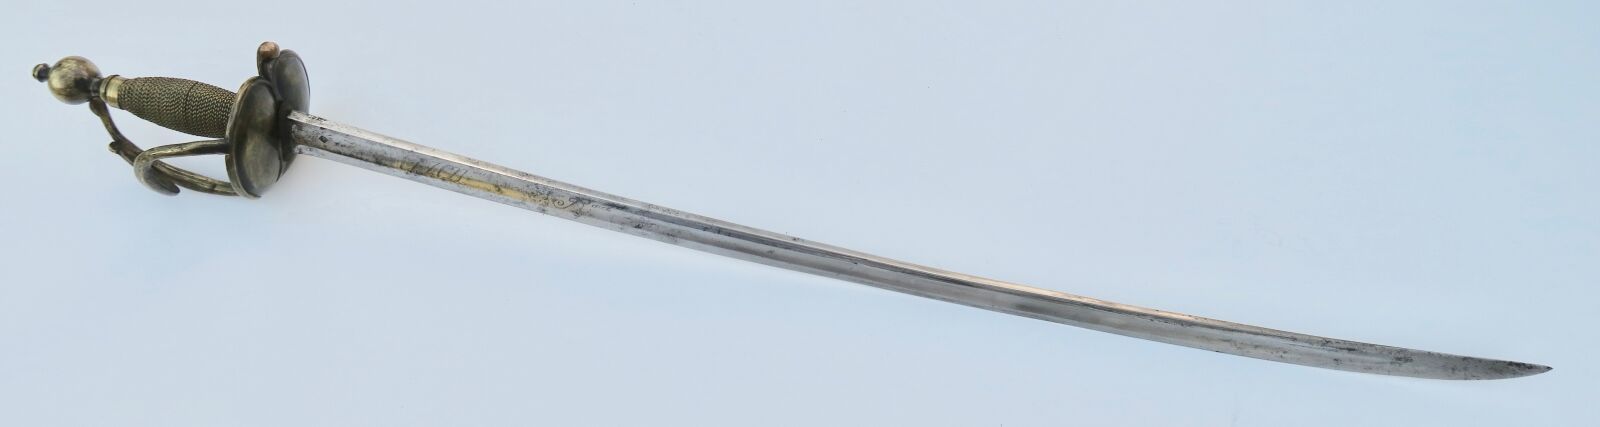 Null Grenadier sword model 1750 for the Royal Grenadiers regiment. Brass mountin&hellip;